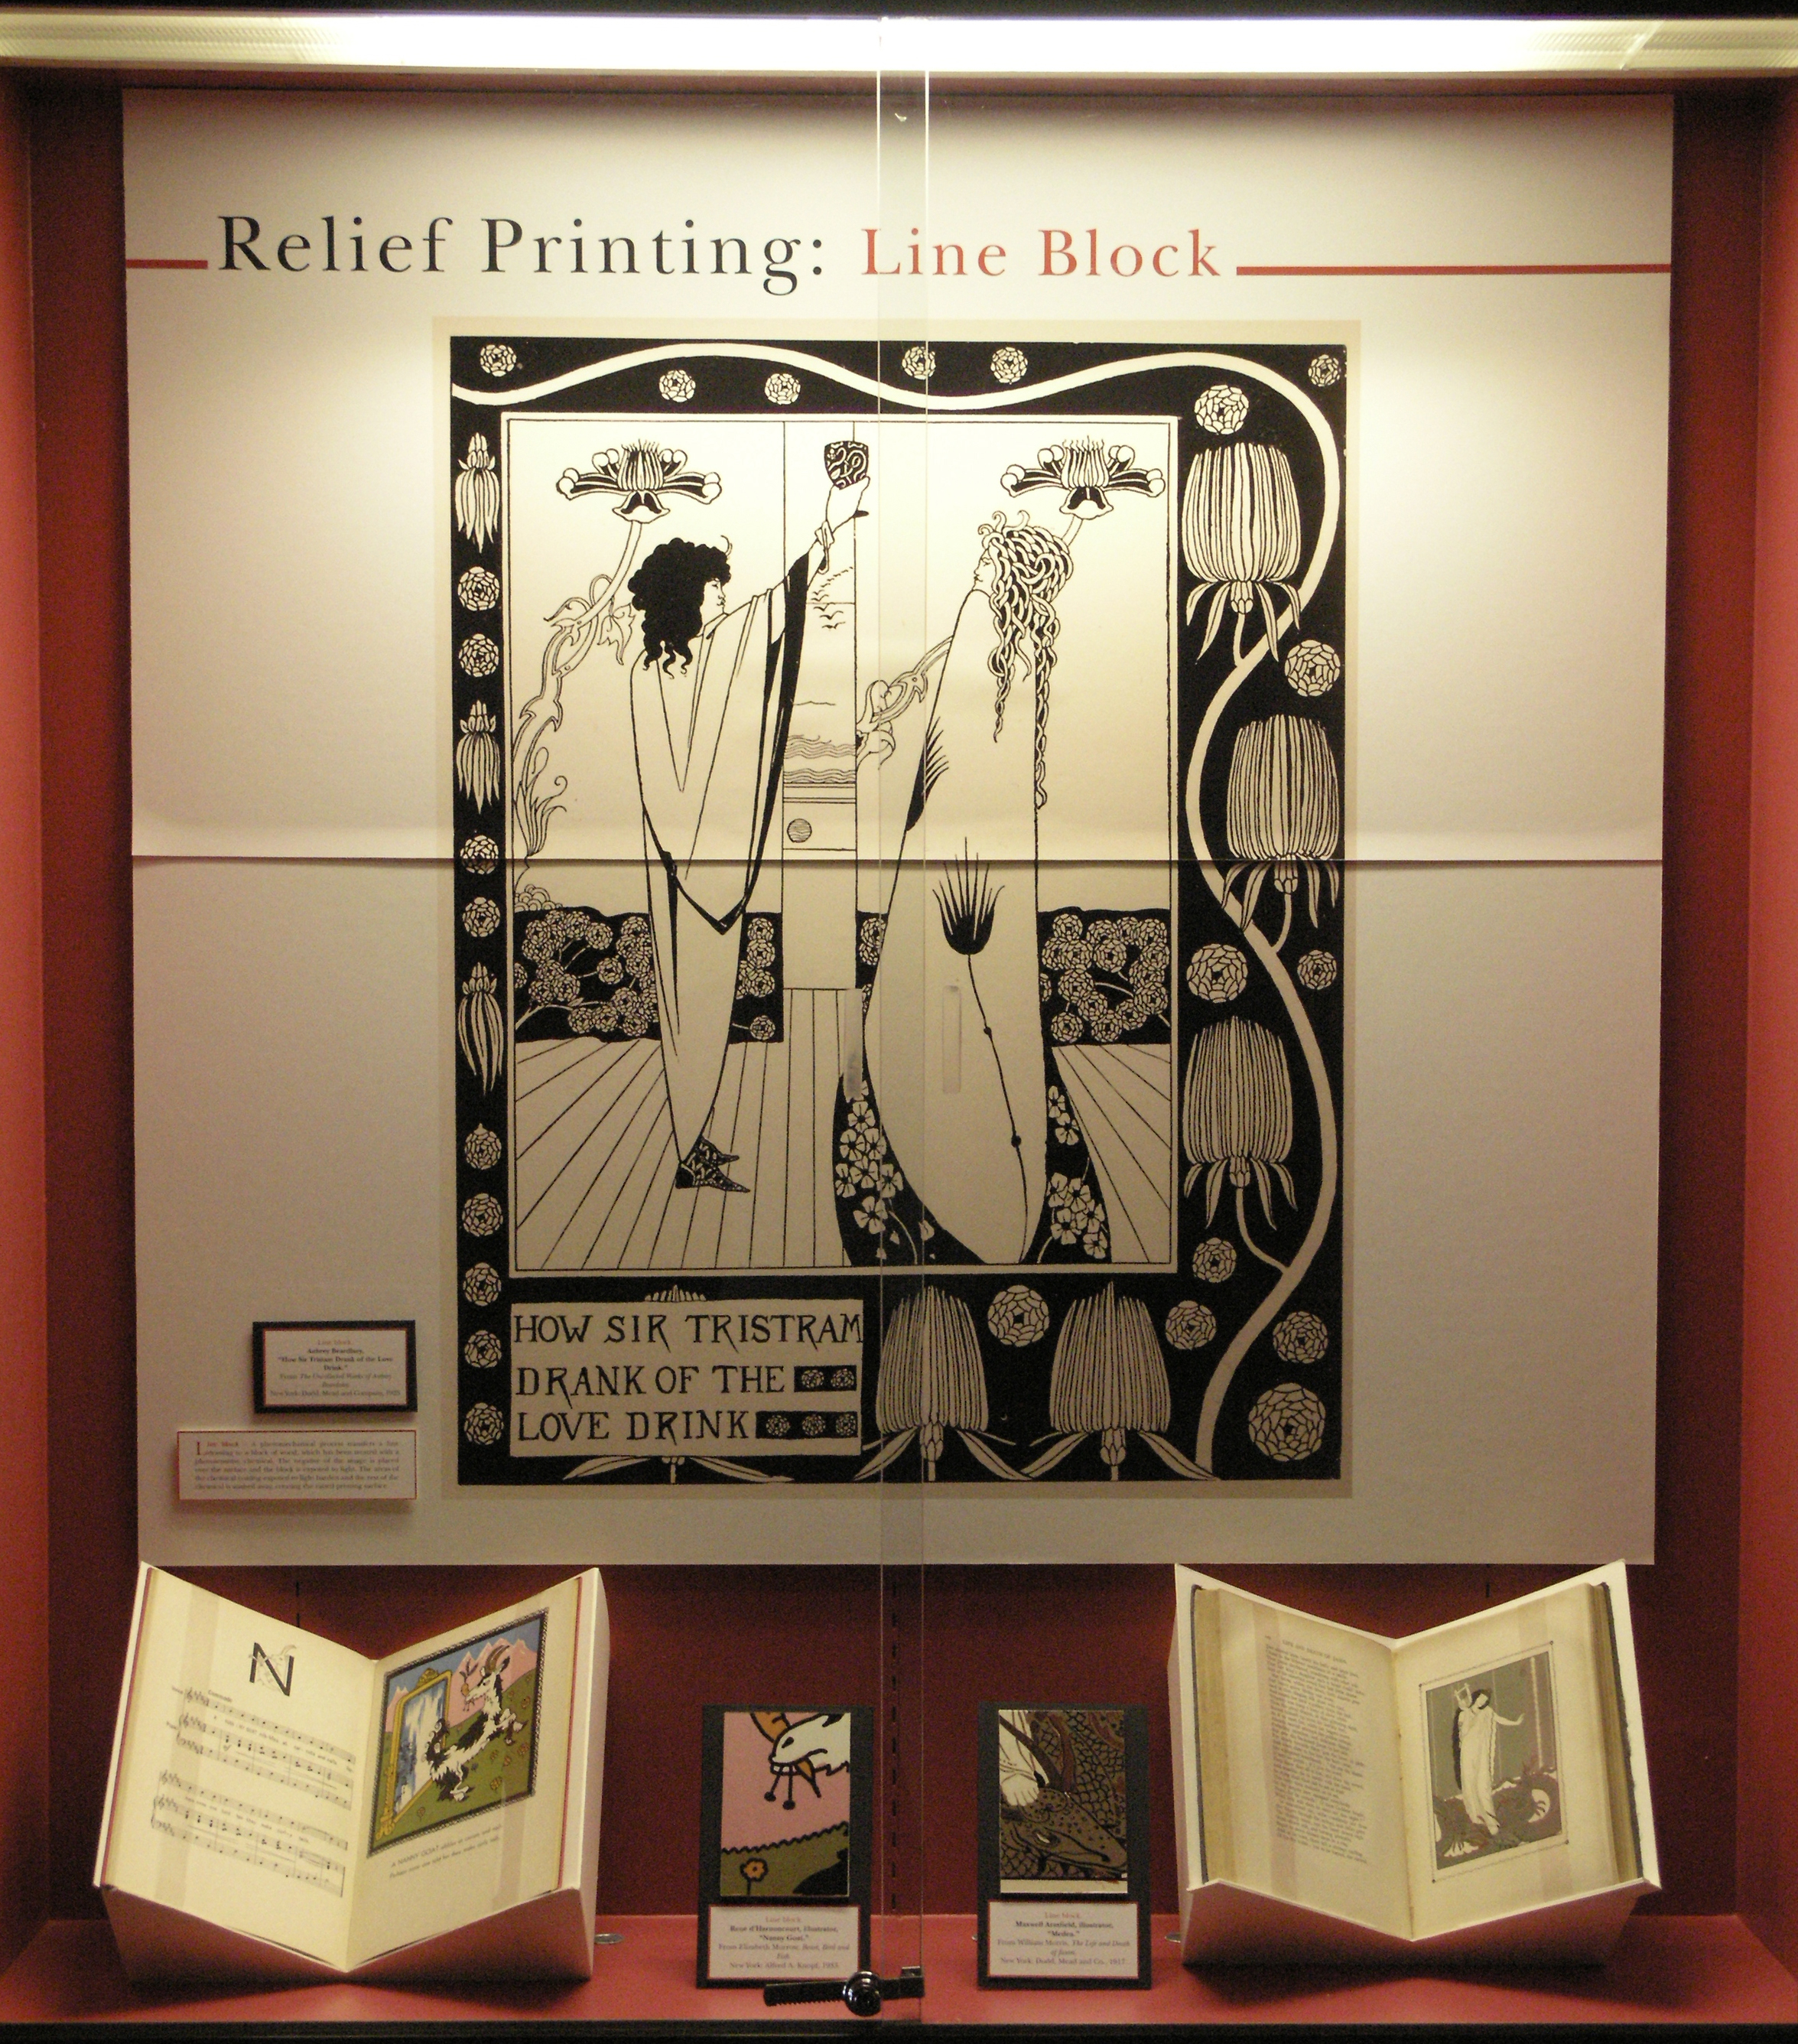 Case 3 - Relief Printing: Line Block